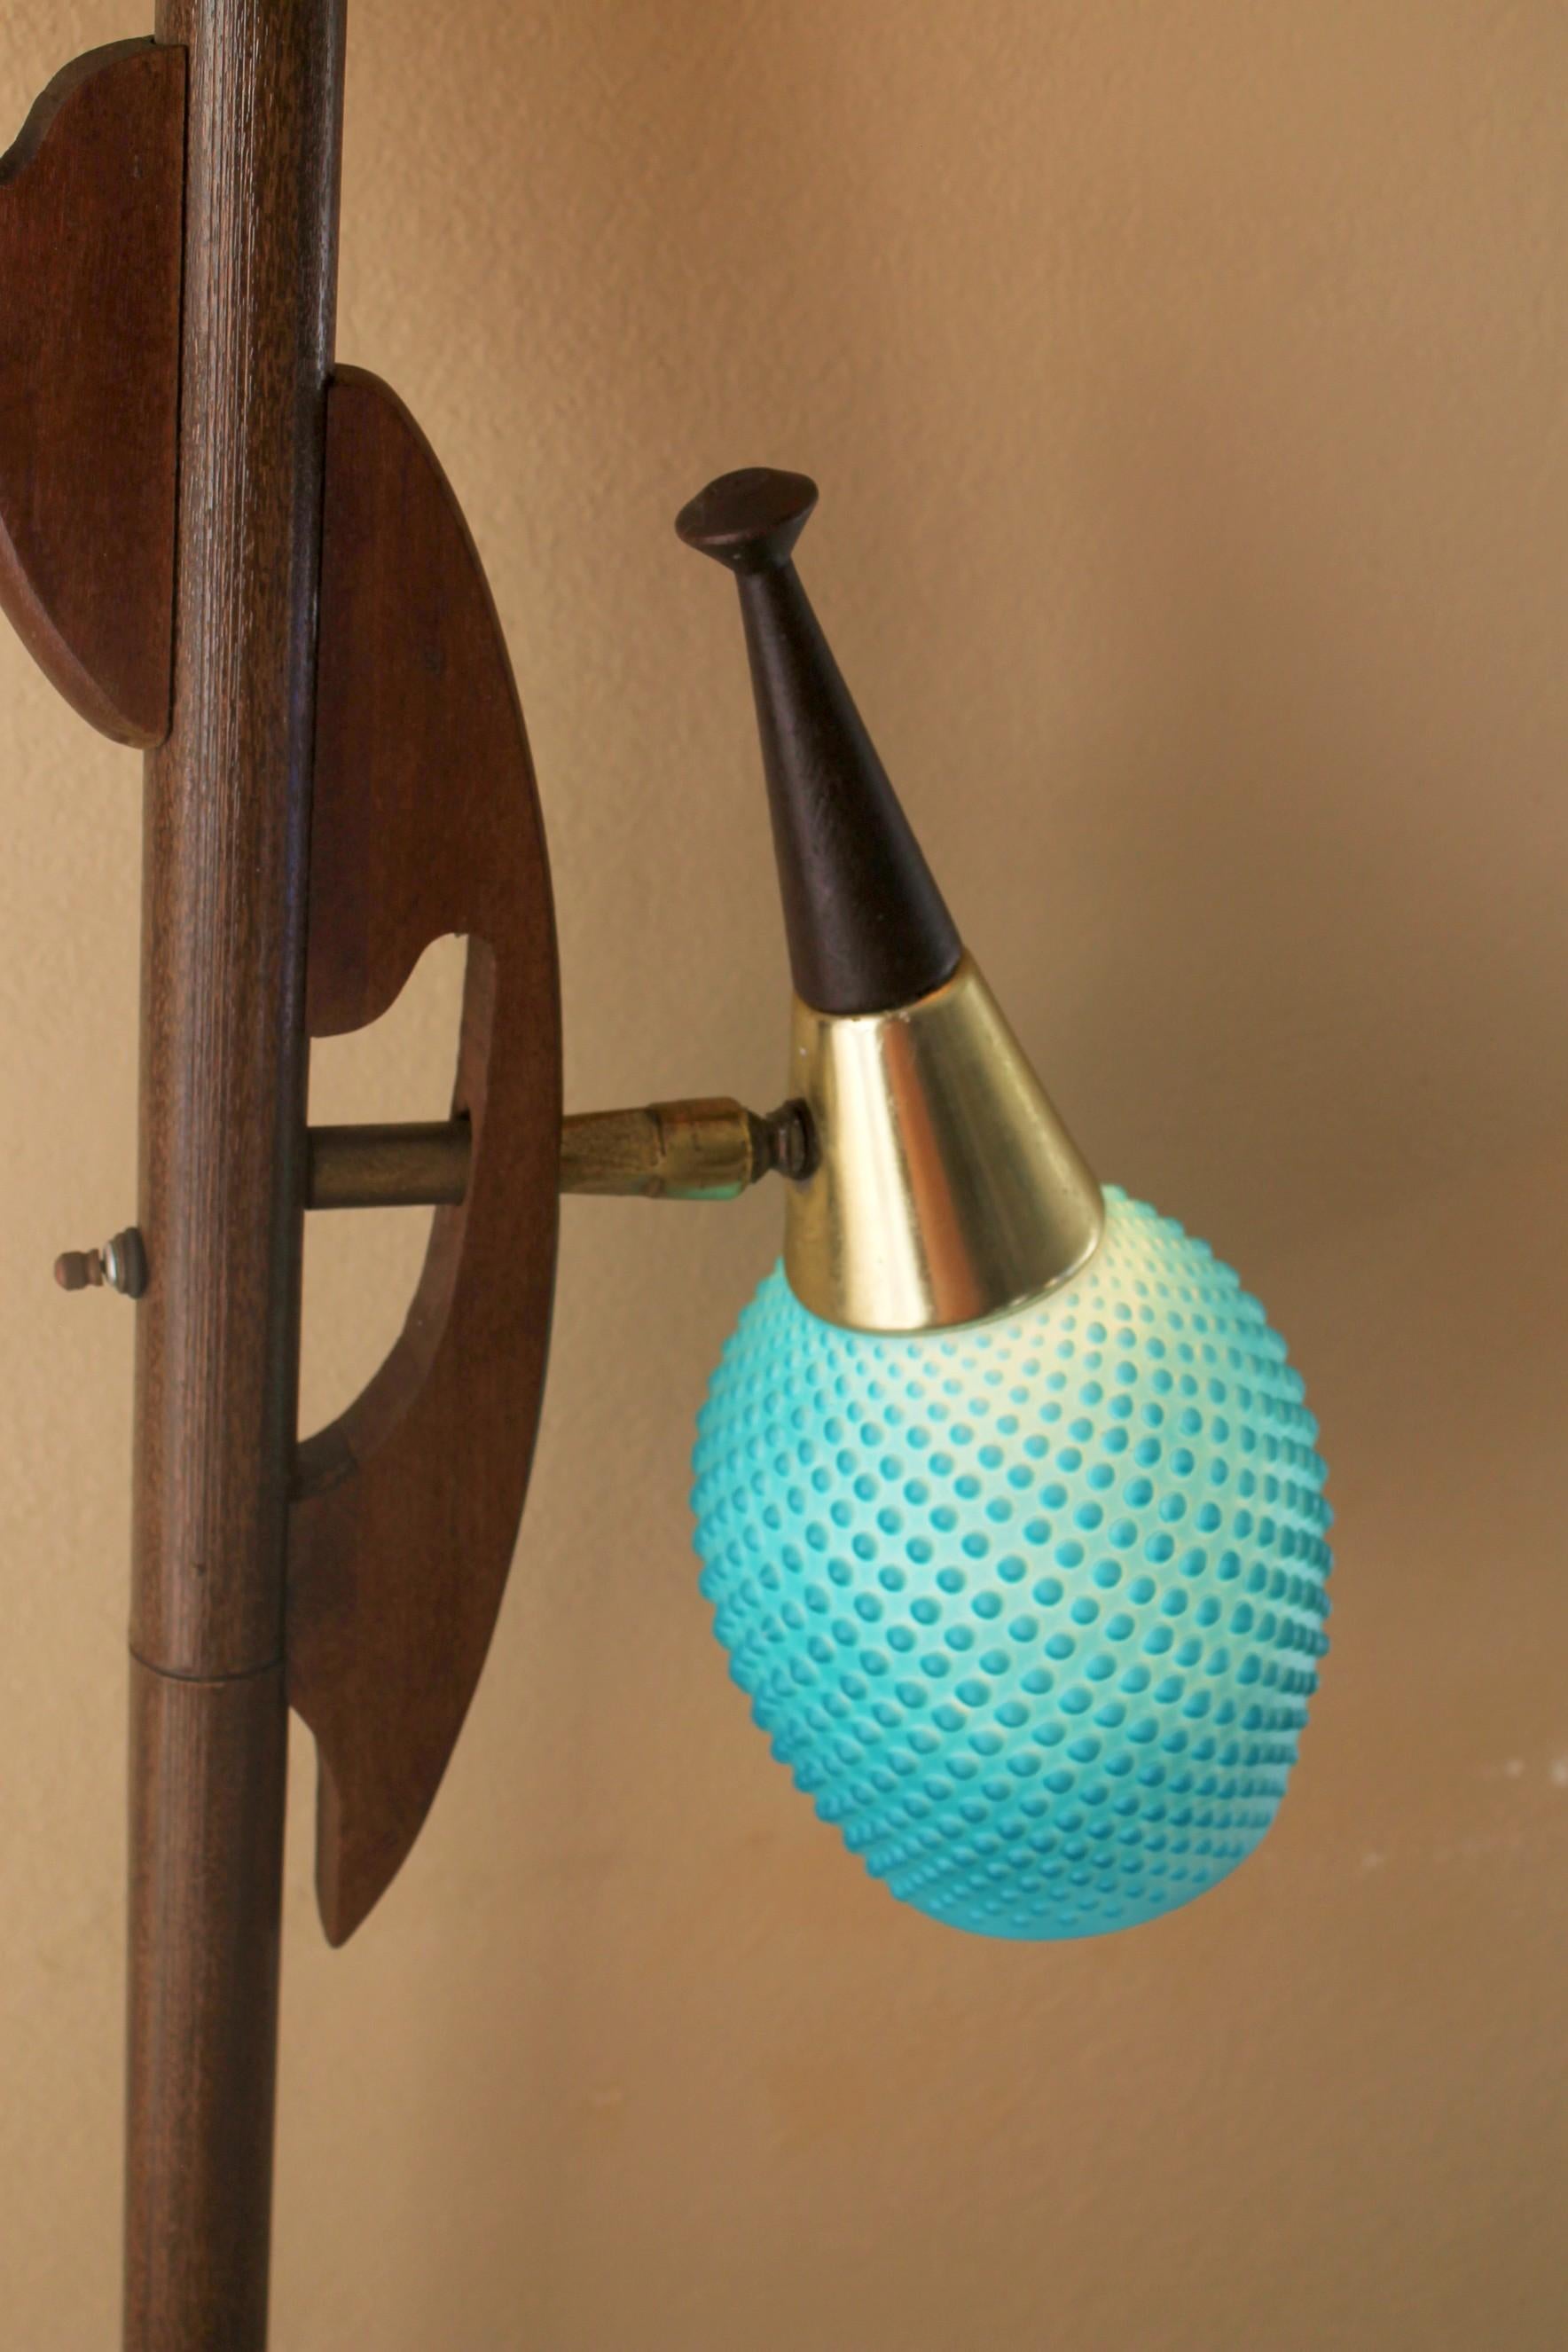 Mid Century Danish Modern 3-Shade Glass Tension Pole Lamp 1950s Stiffel Era In Good Condition For Sale In Peoria, AZ